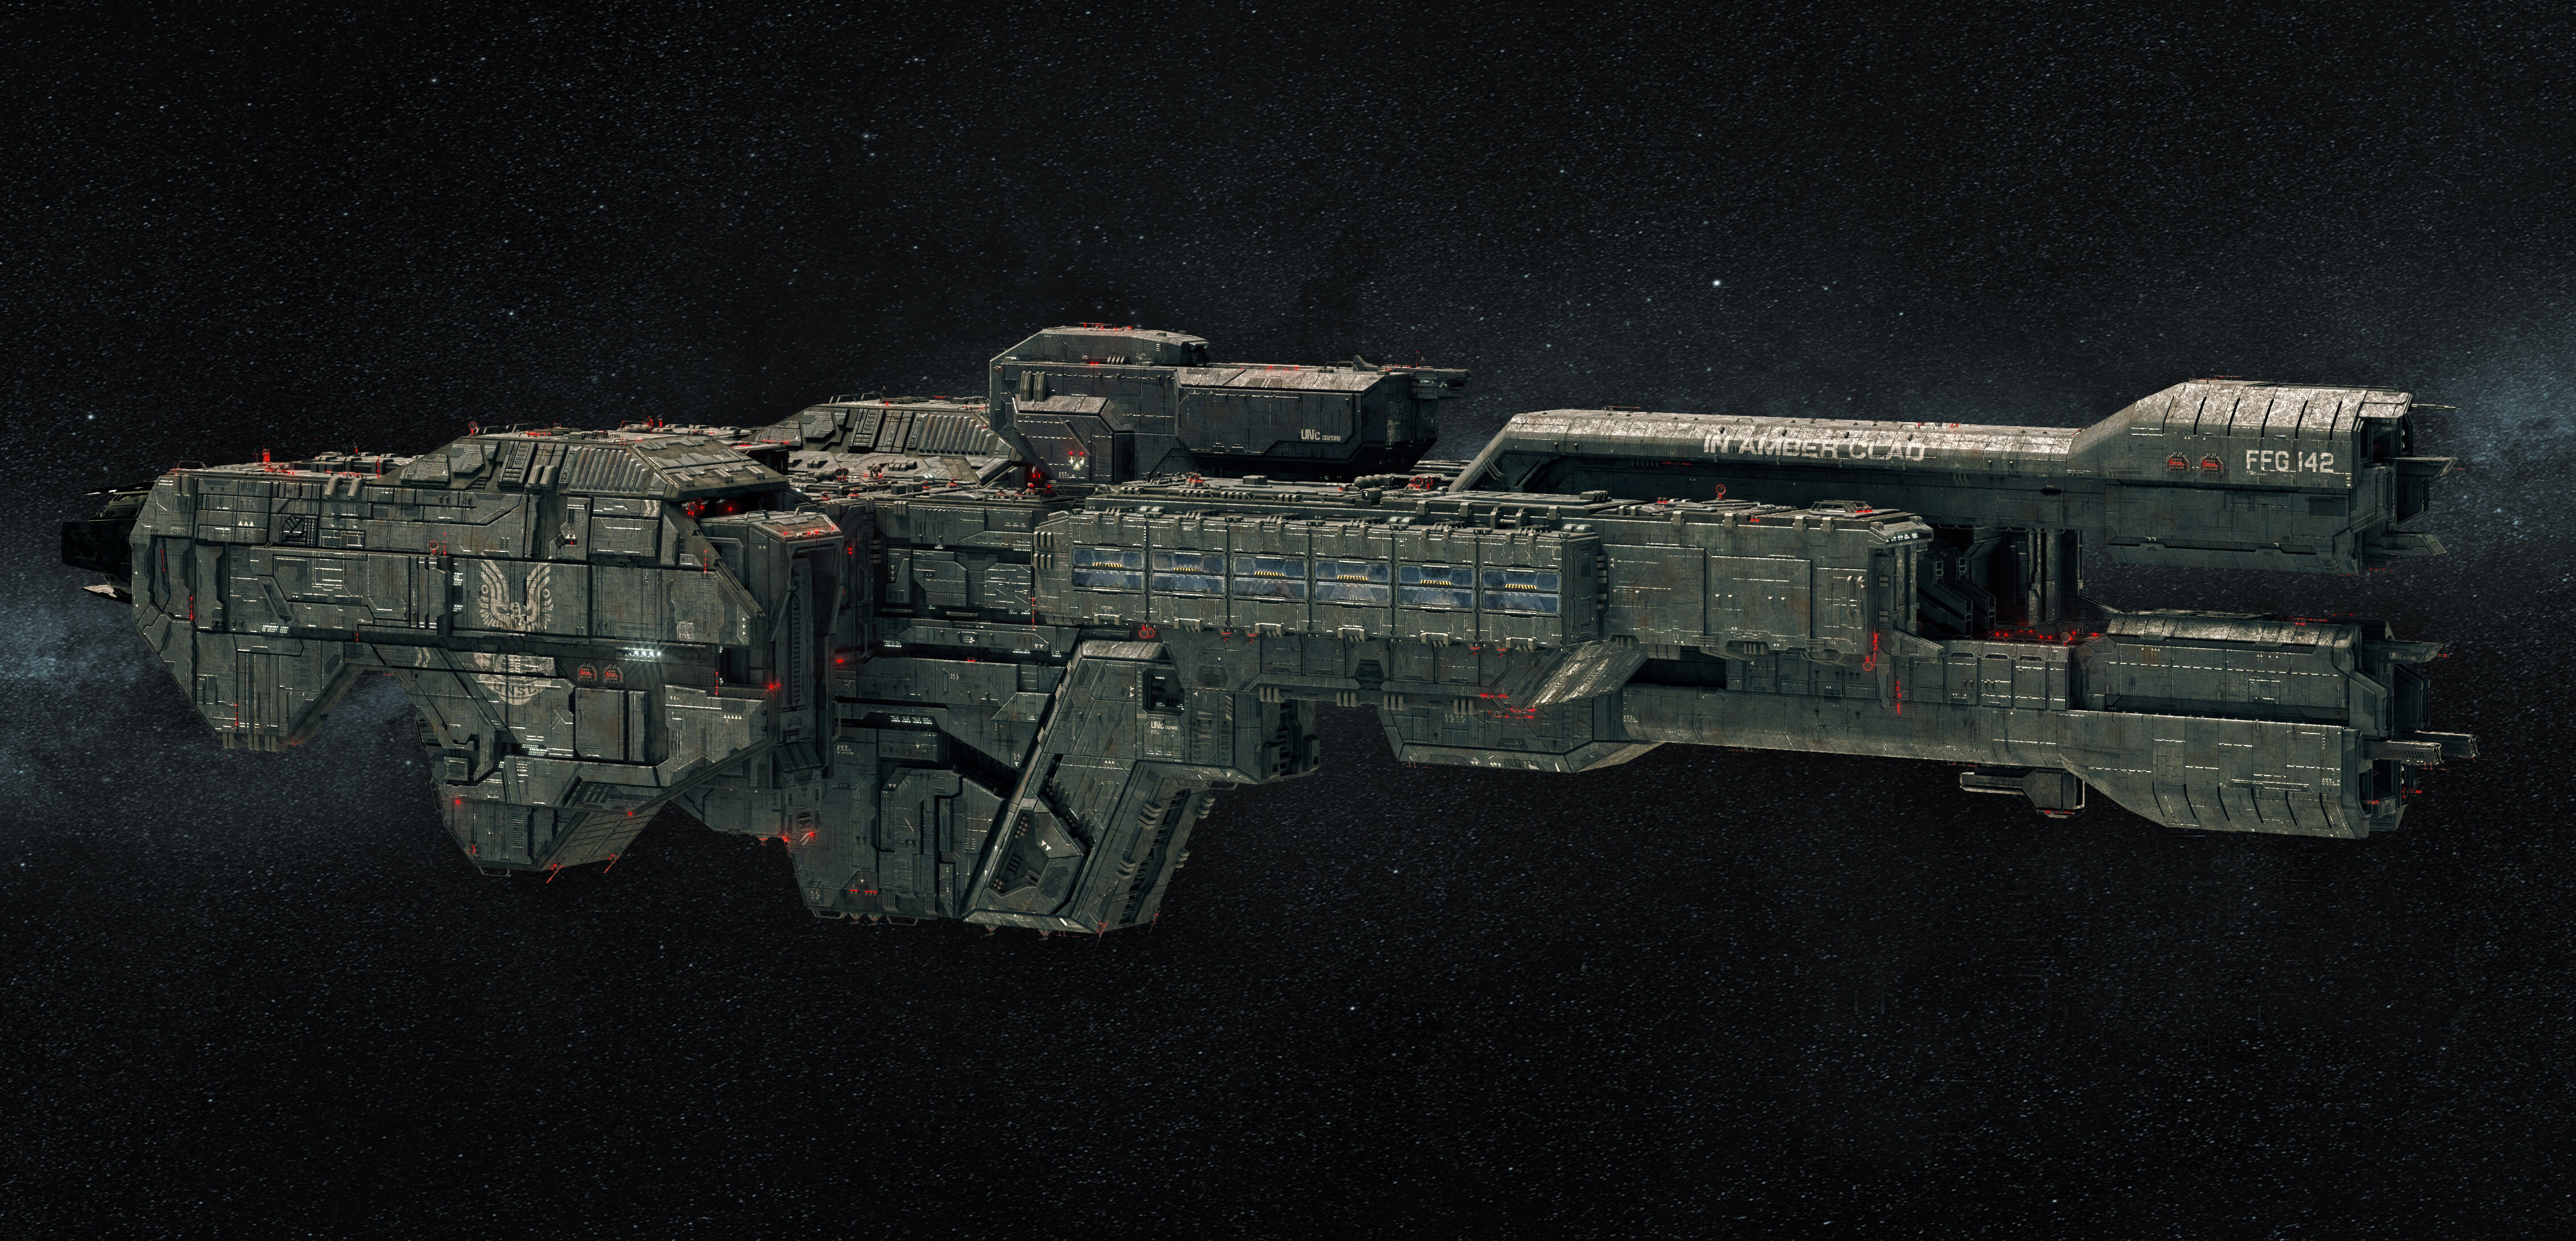 【HALO艦船頻道】UNSC琥珀衣者號 —— 決不能放走那艘敵艦！